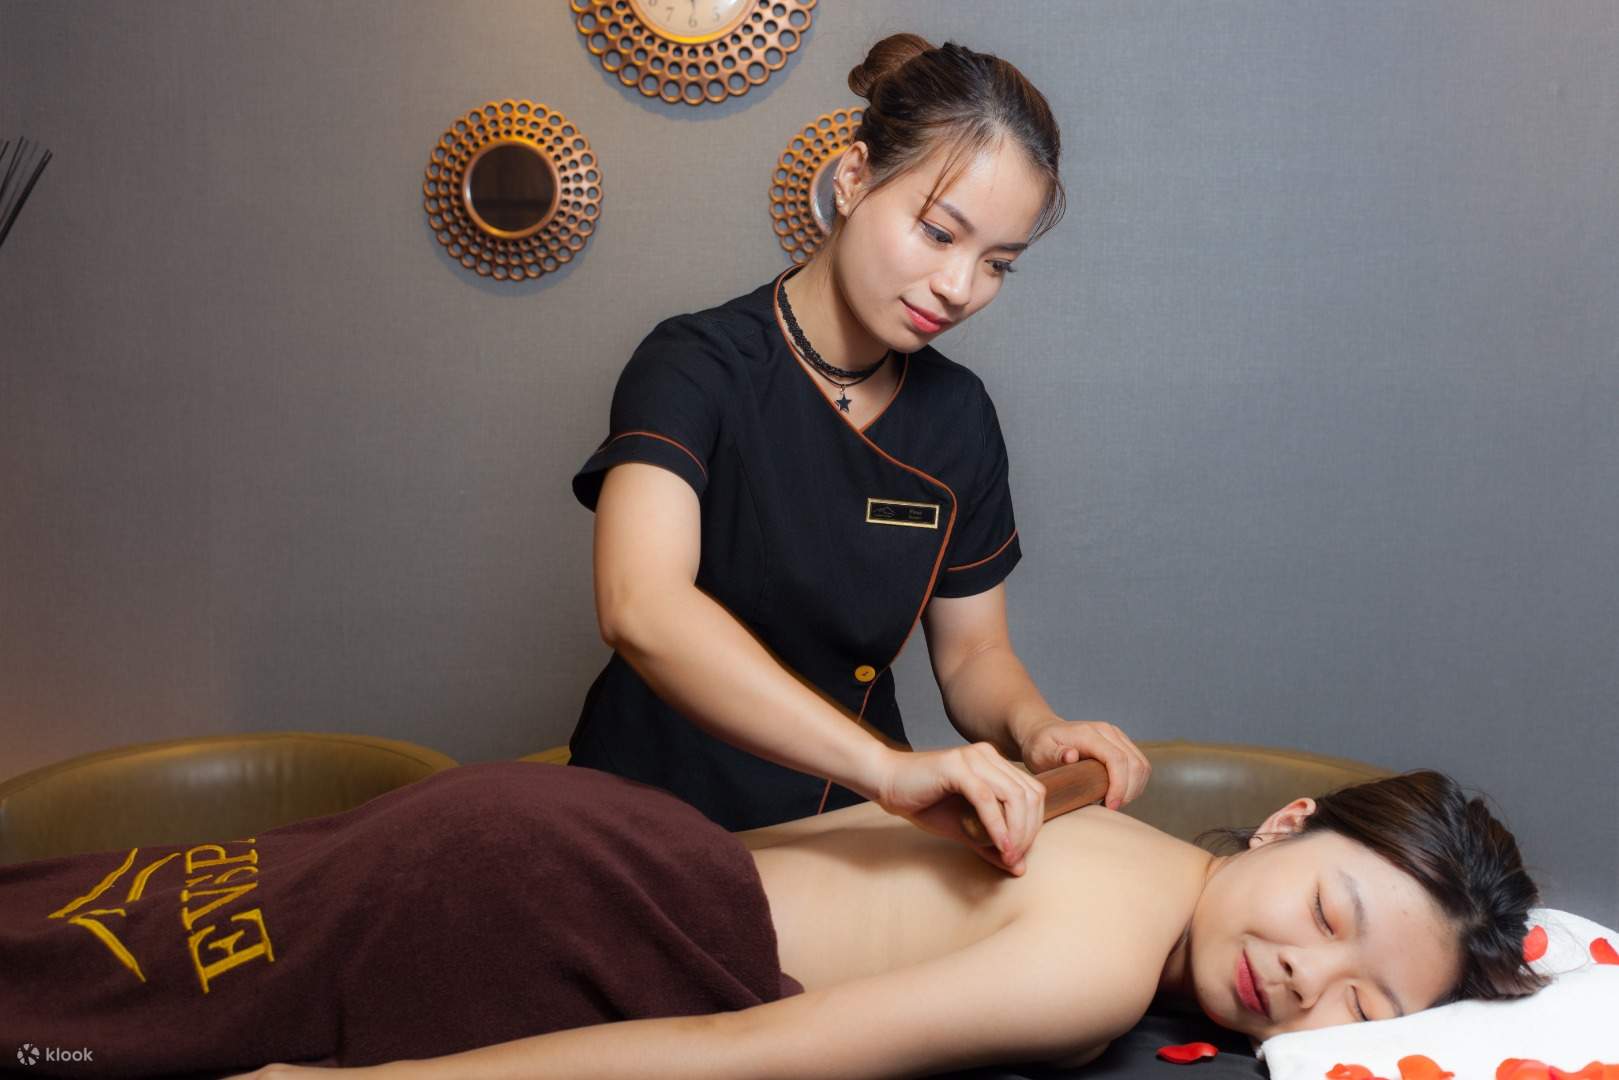 brian mulroe recommends vietnamese massage near me pic